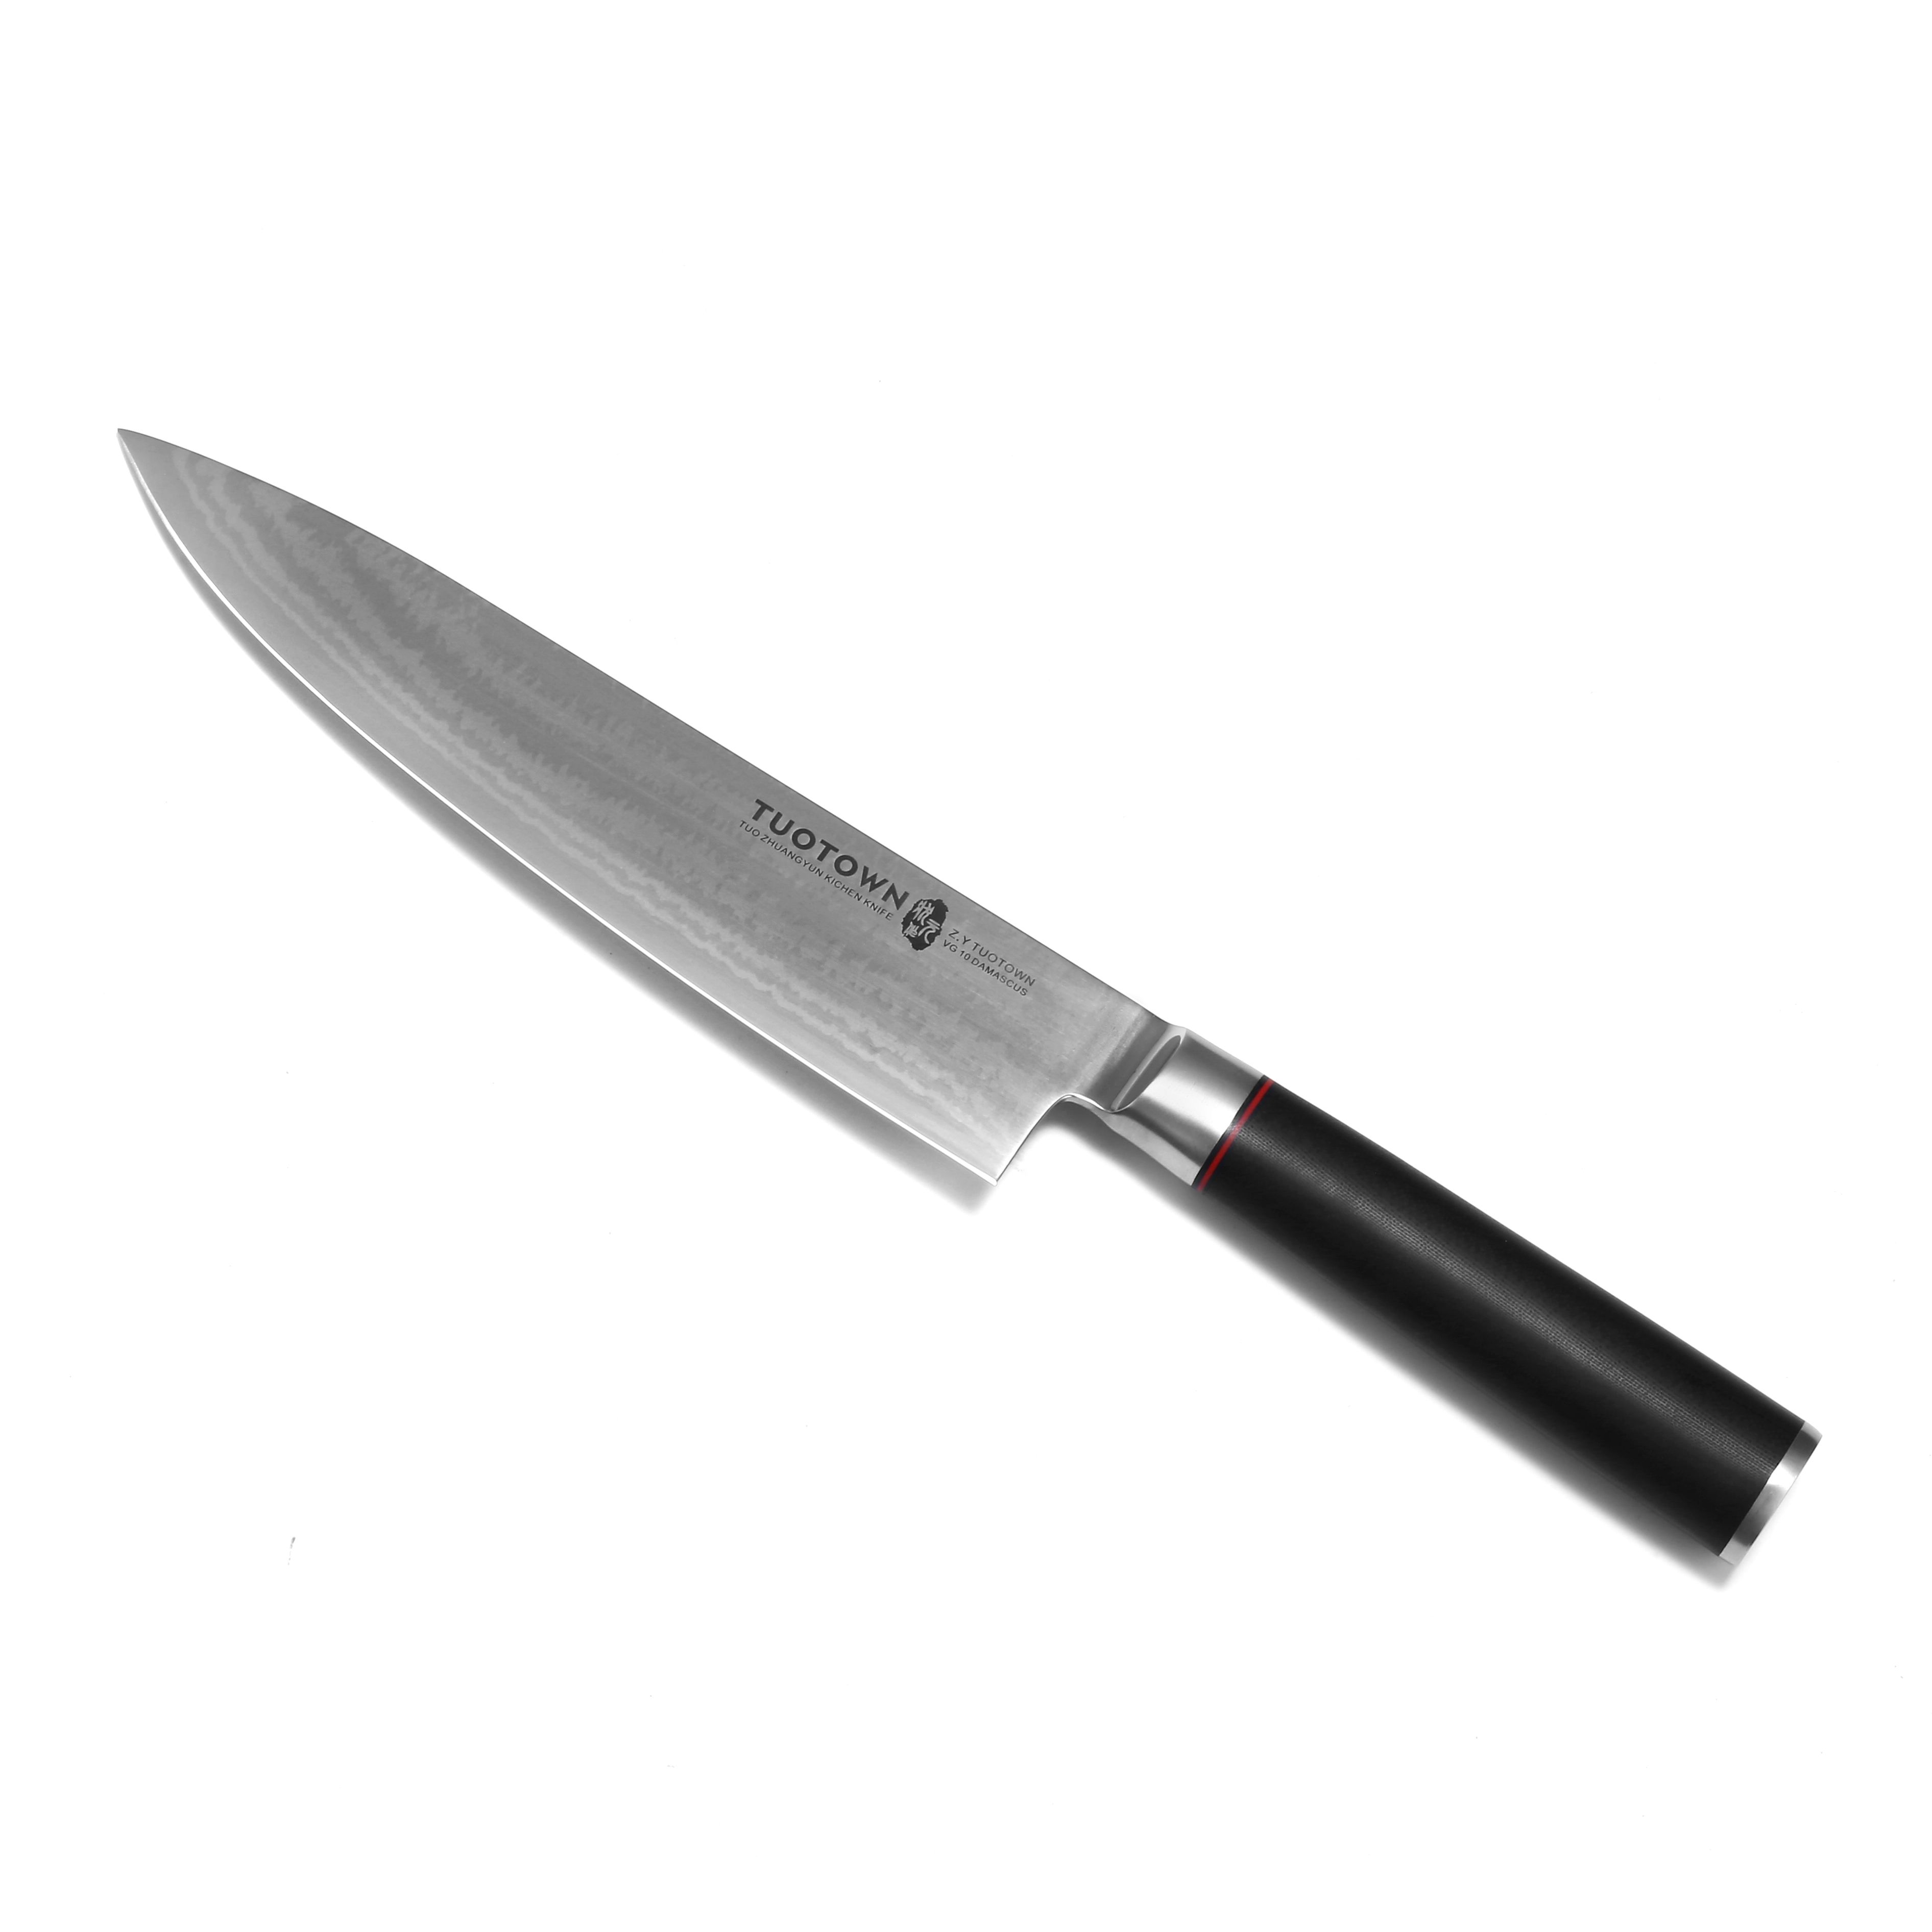 Кухонные ножи tuotown. SM-0064/A нож кухонный "Samura mo-v" малый Мясницкий 155 мм, g-10. TUOTOWN ножи.